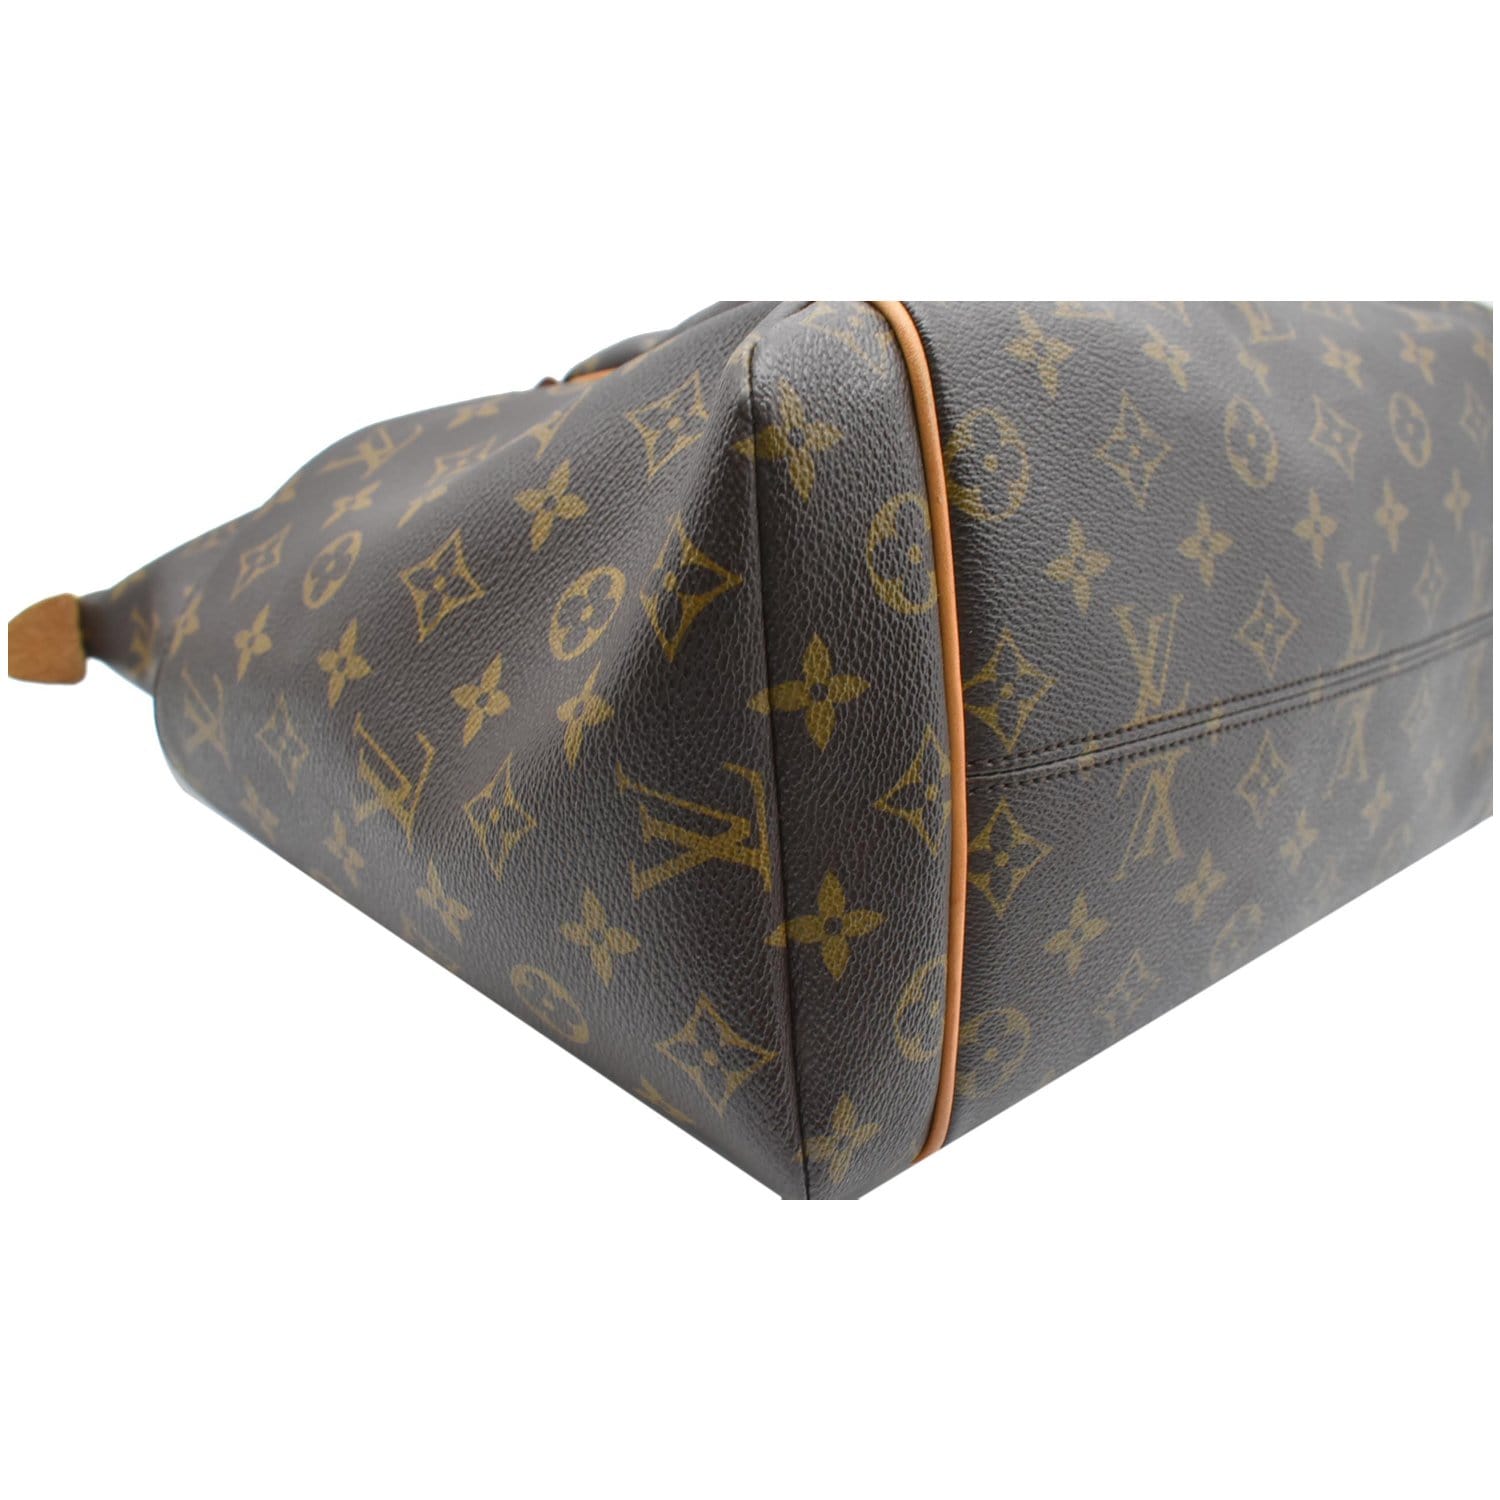 Super Hot Item❤️‍🔥❤️‍🔥 Louis Vuitton Monogram Nano Noe Shoulder Bag  M41346 SKU: 36912-6 ⁠ ⁠===================================⁠ ⁠ You can…